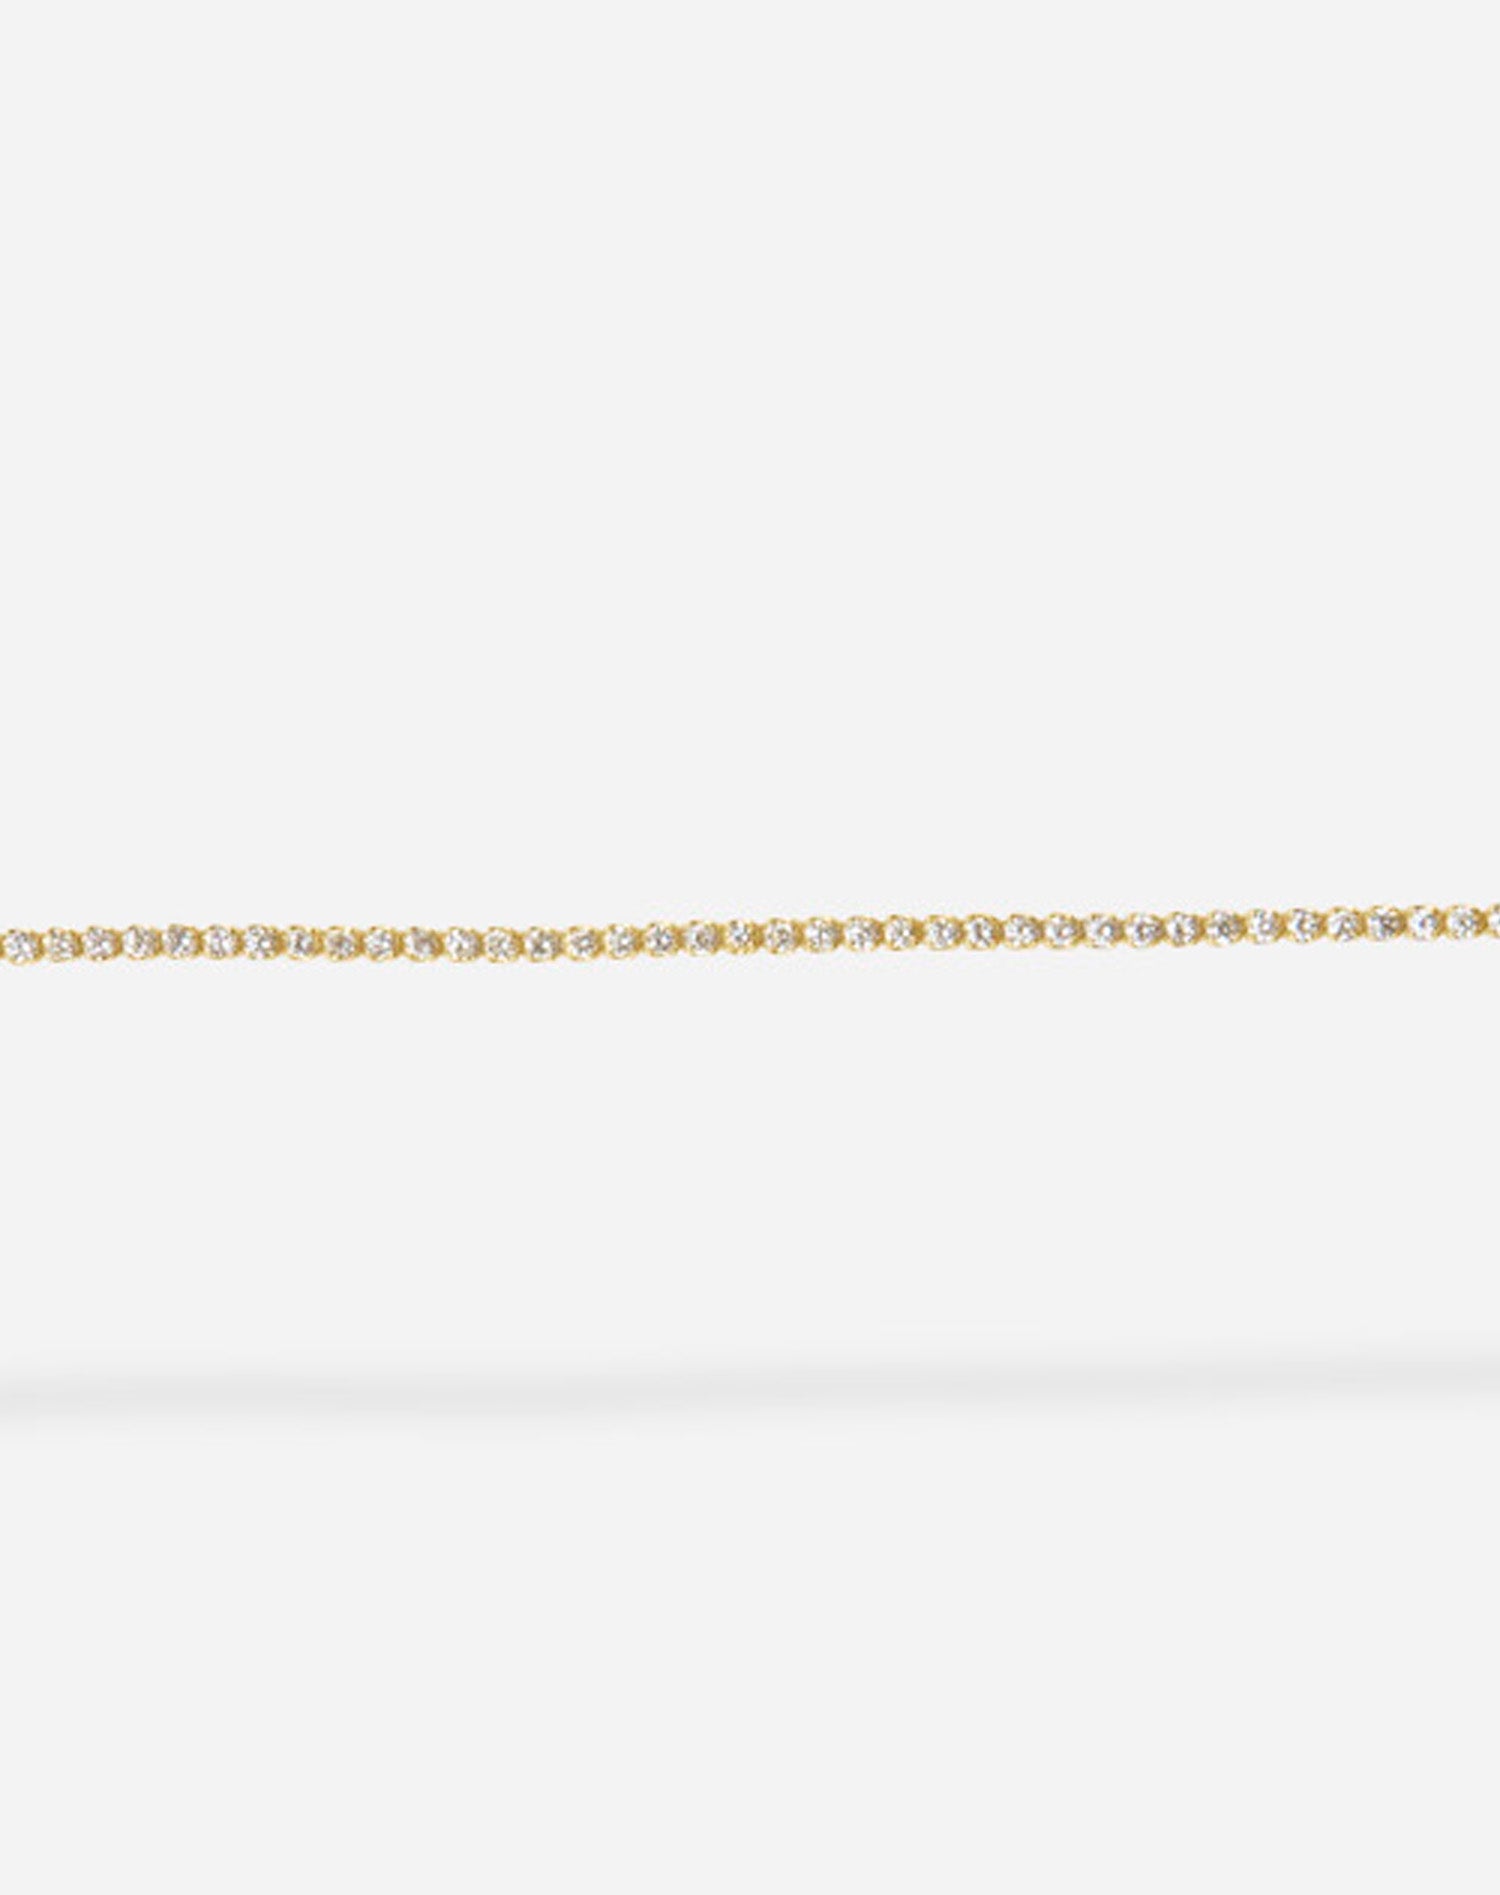 350 CT Black Diamond Tennis Bracelet in 18k White Yellow Pink or Black  Gold  Belgium Diamonds Official Site